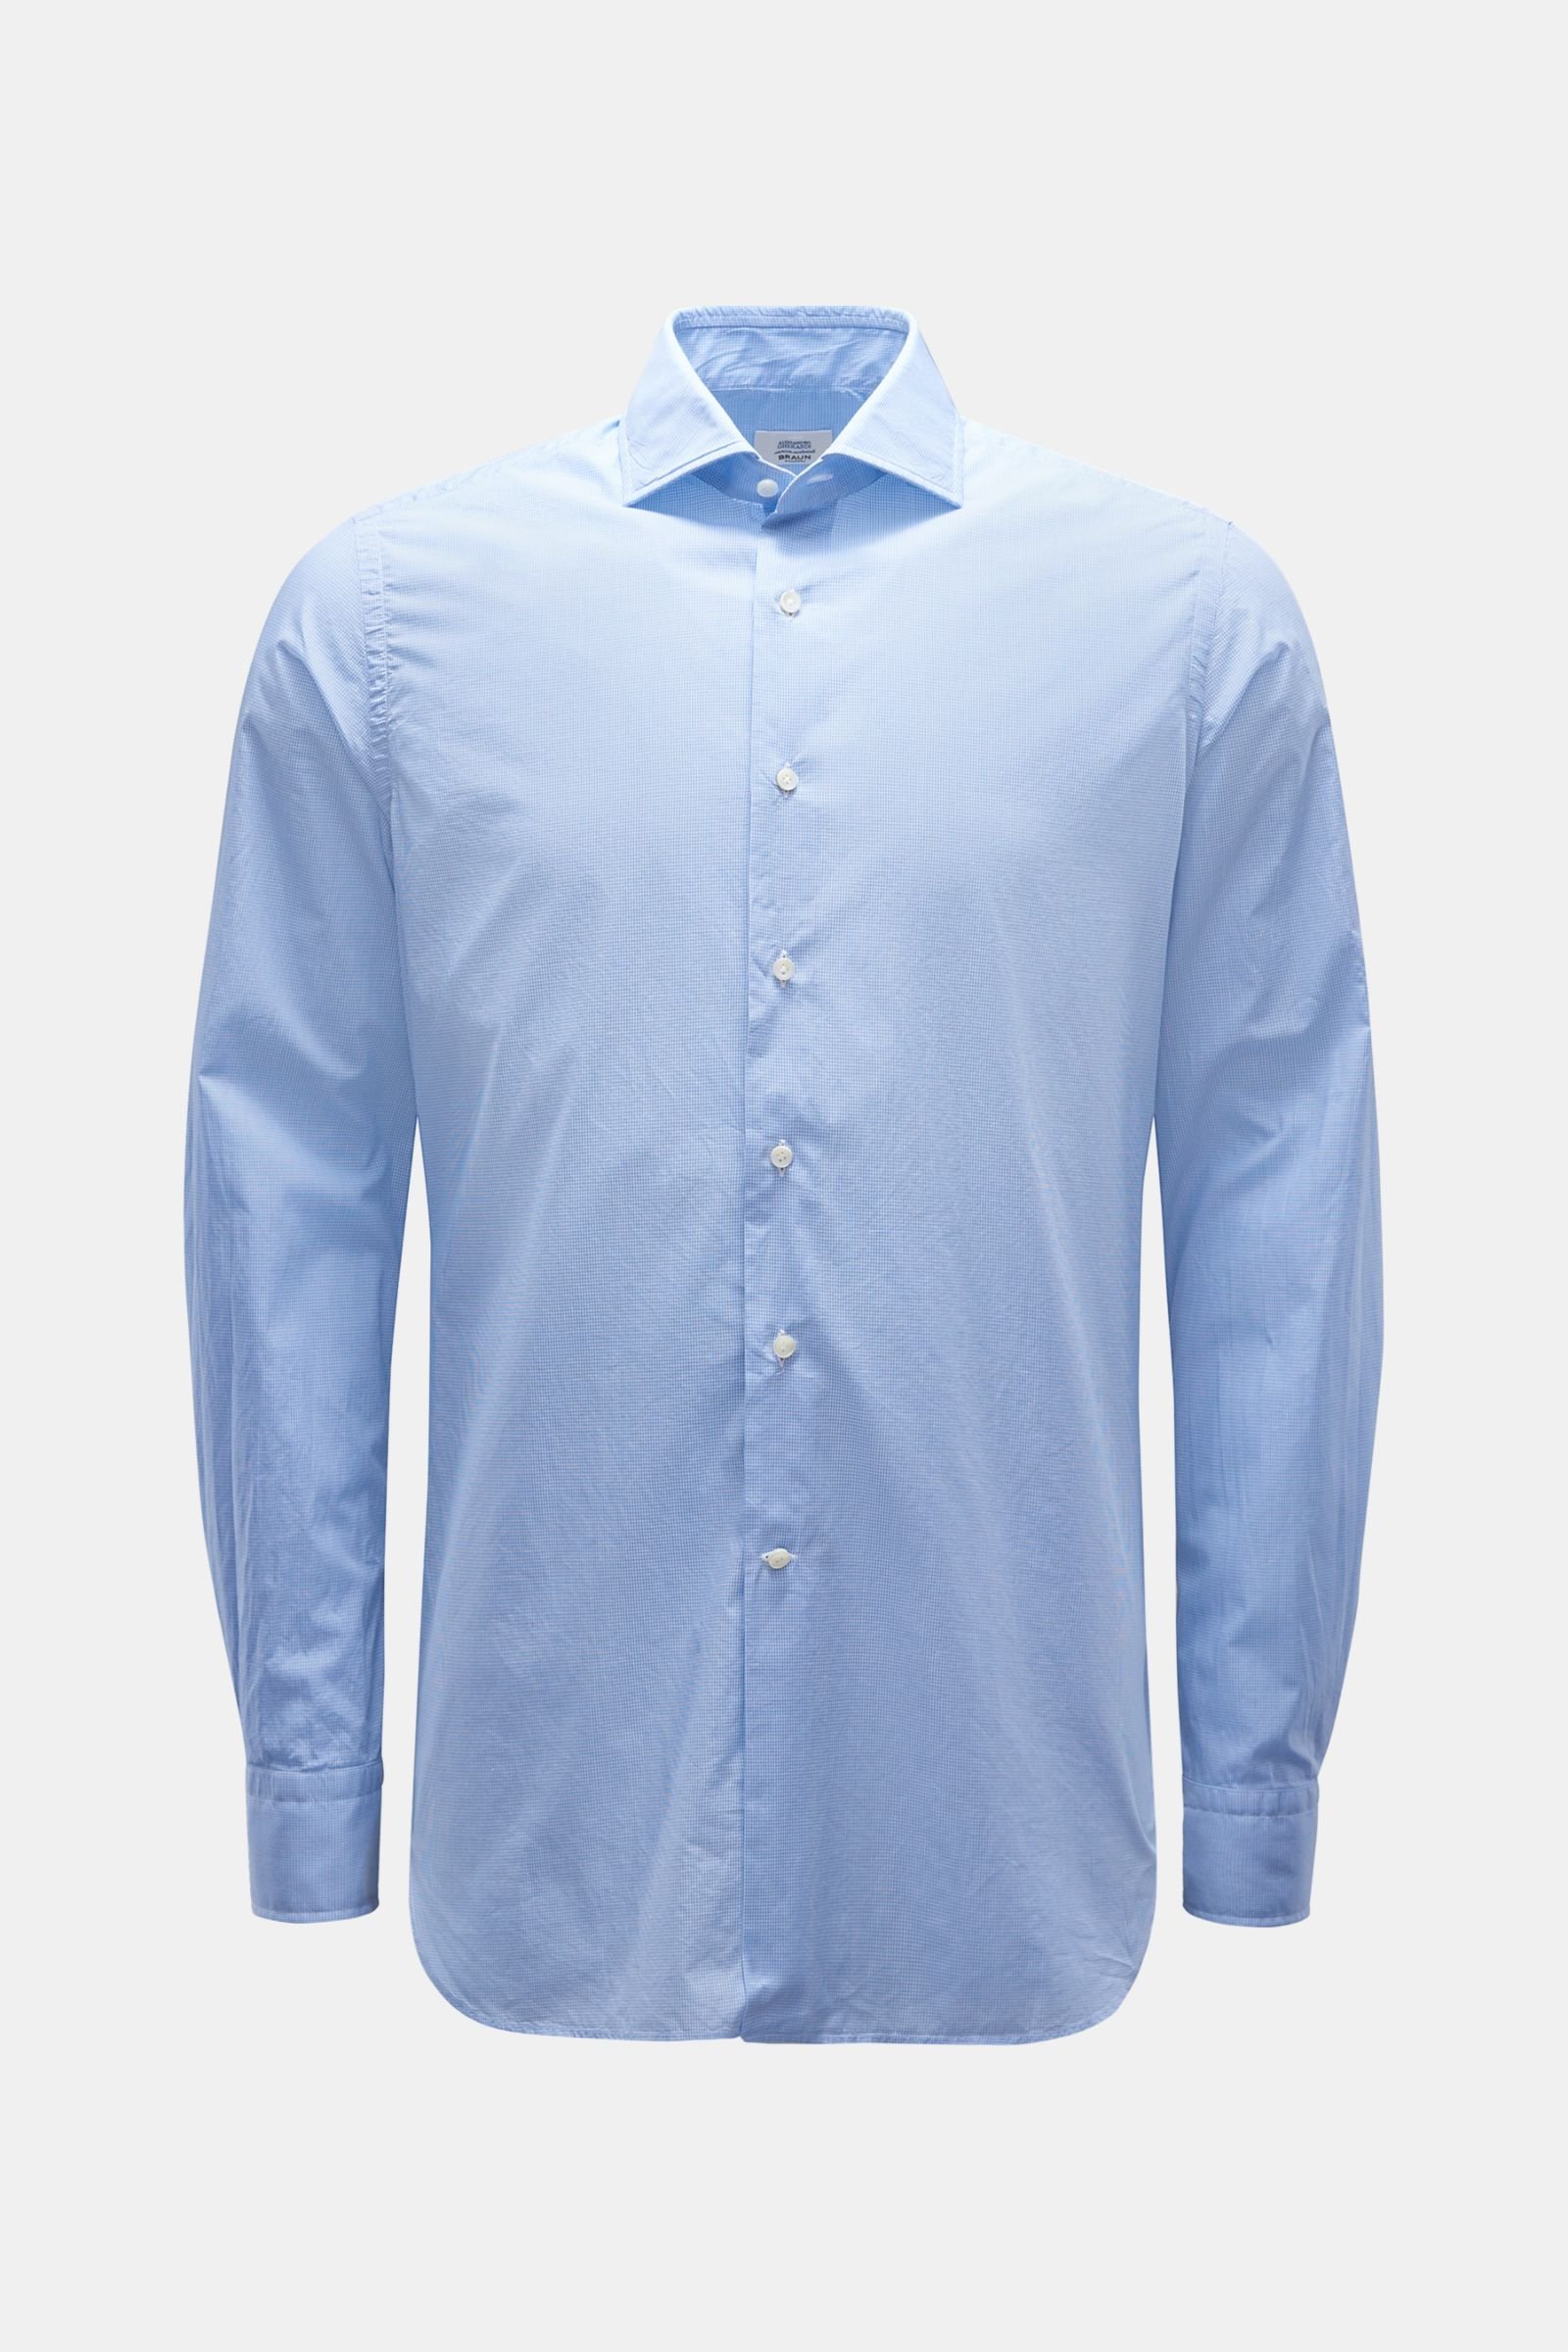 Casual shirt shark collar light blue/white checked